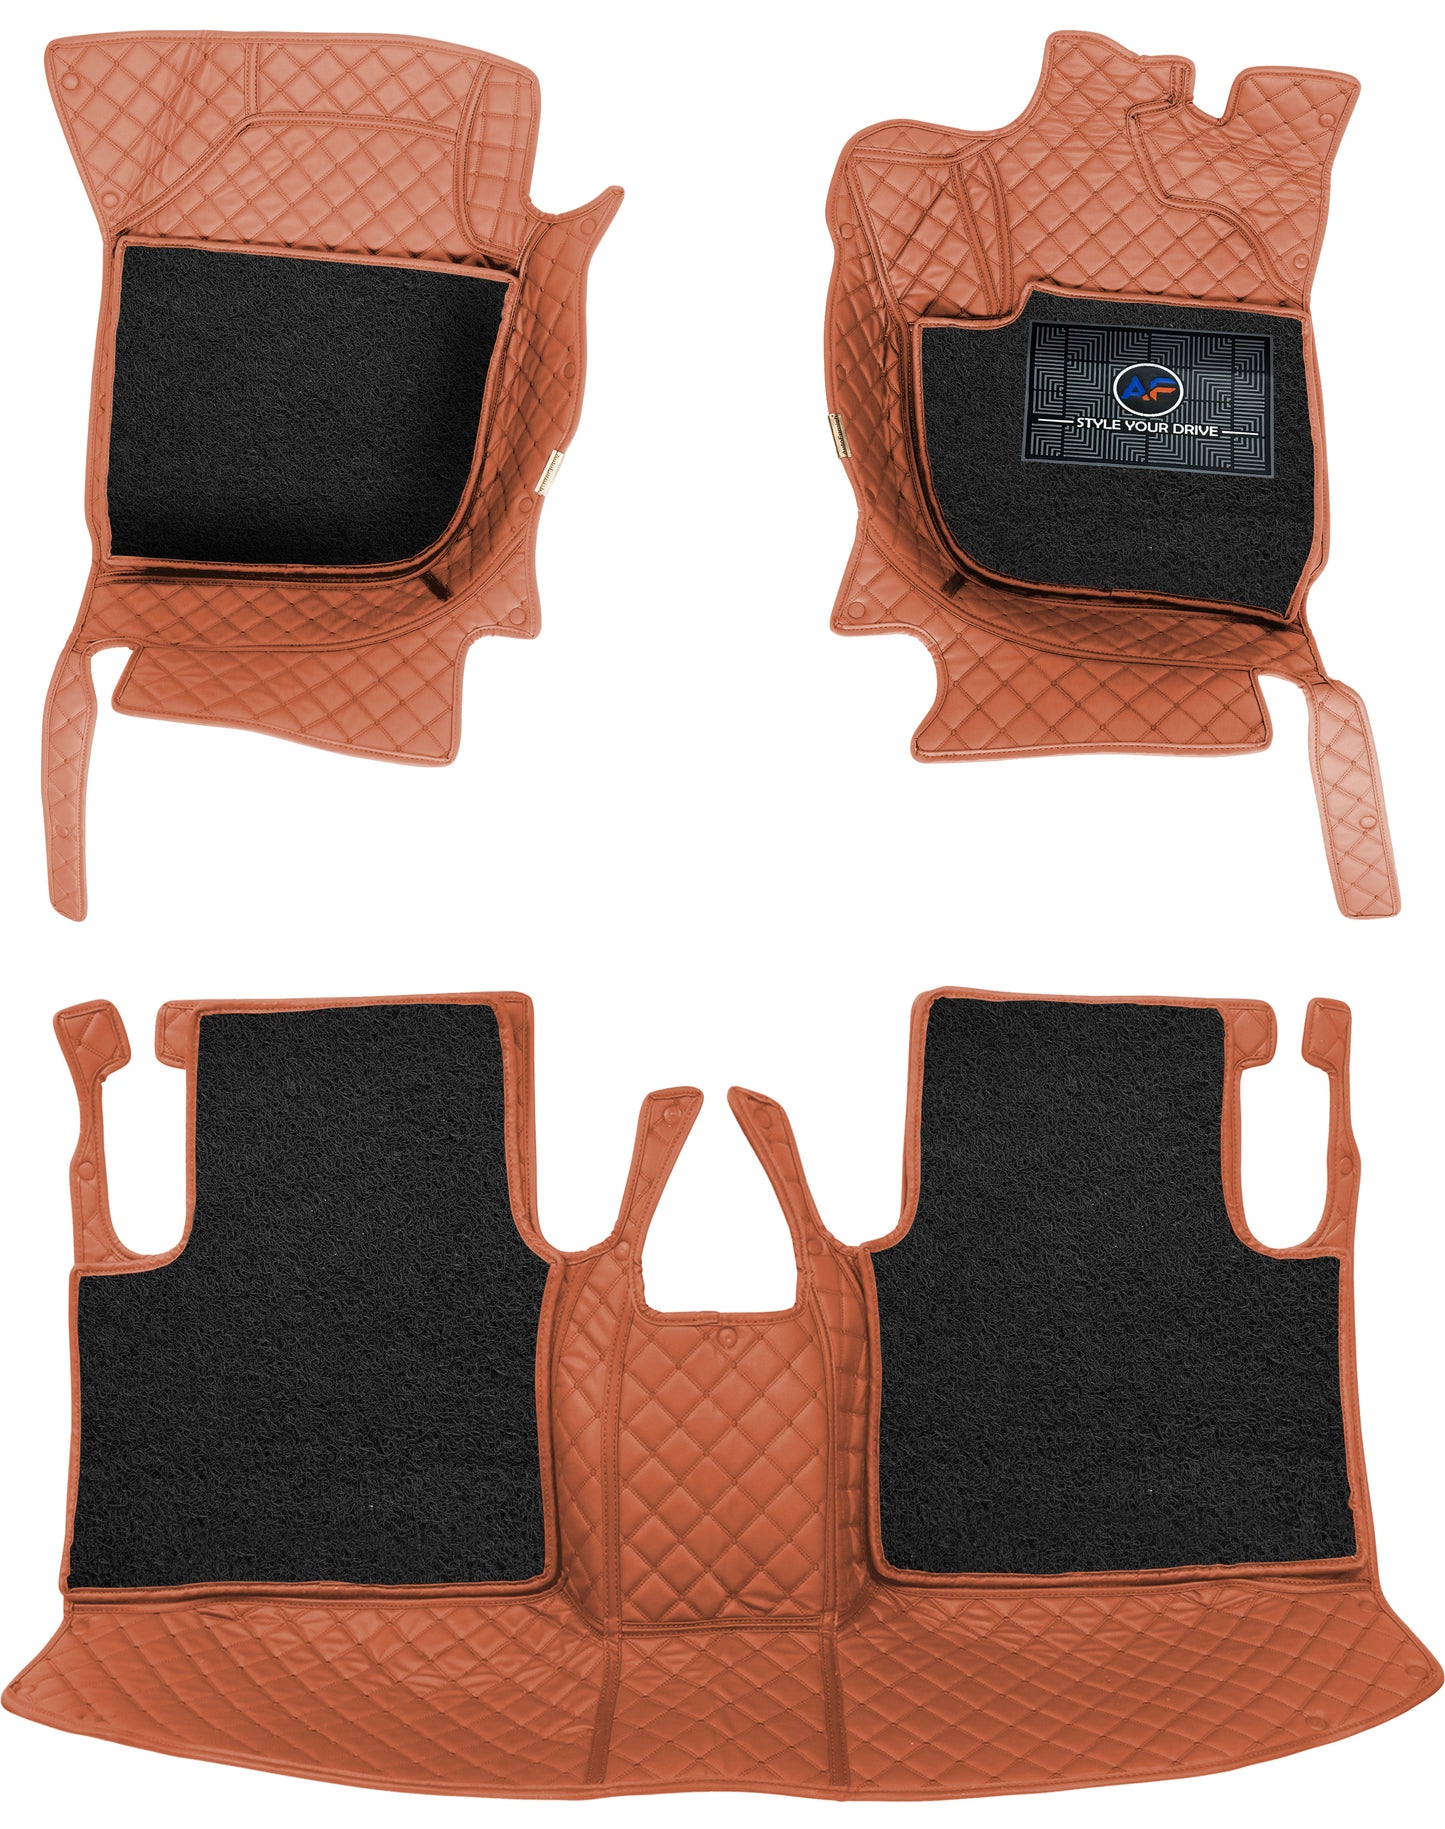 Tata Safari (7 Seater) 2023-7D Luxury Car Mat, All Weather Proof, Anti-Skid, 100% Waterproof & Odorless with Unique Diamond Fish Design (24mm Luxury PU Leather, 2 Rows)